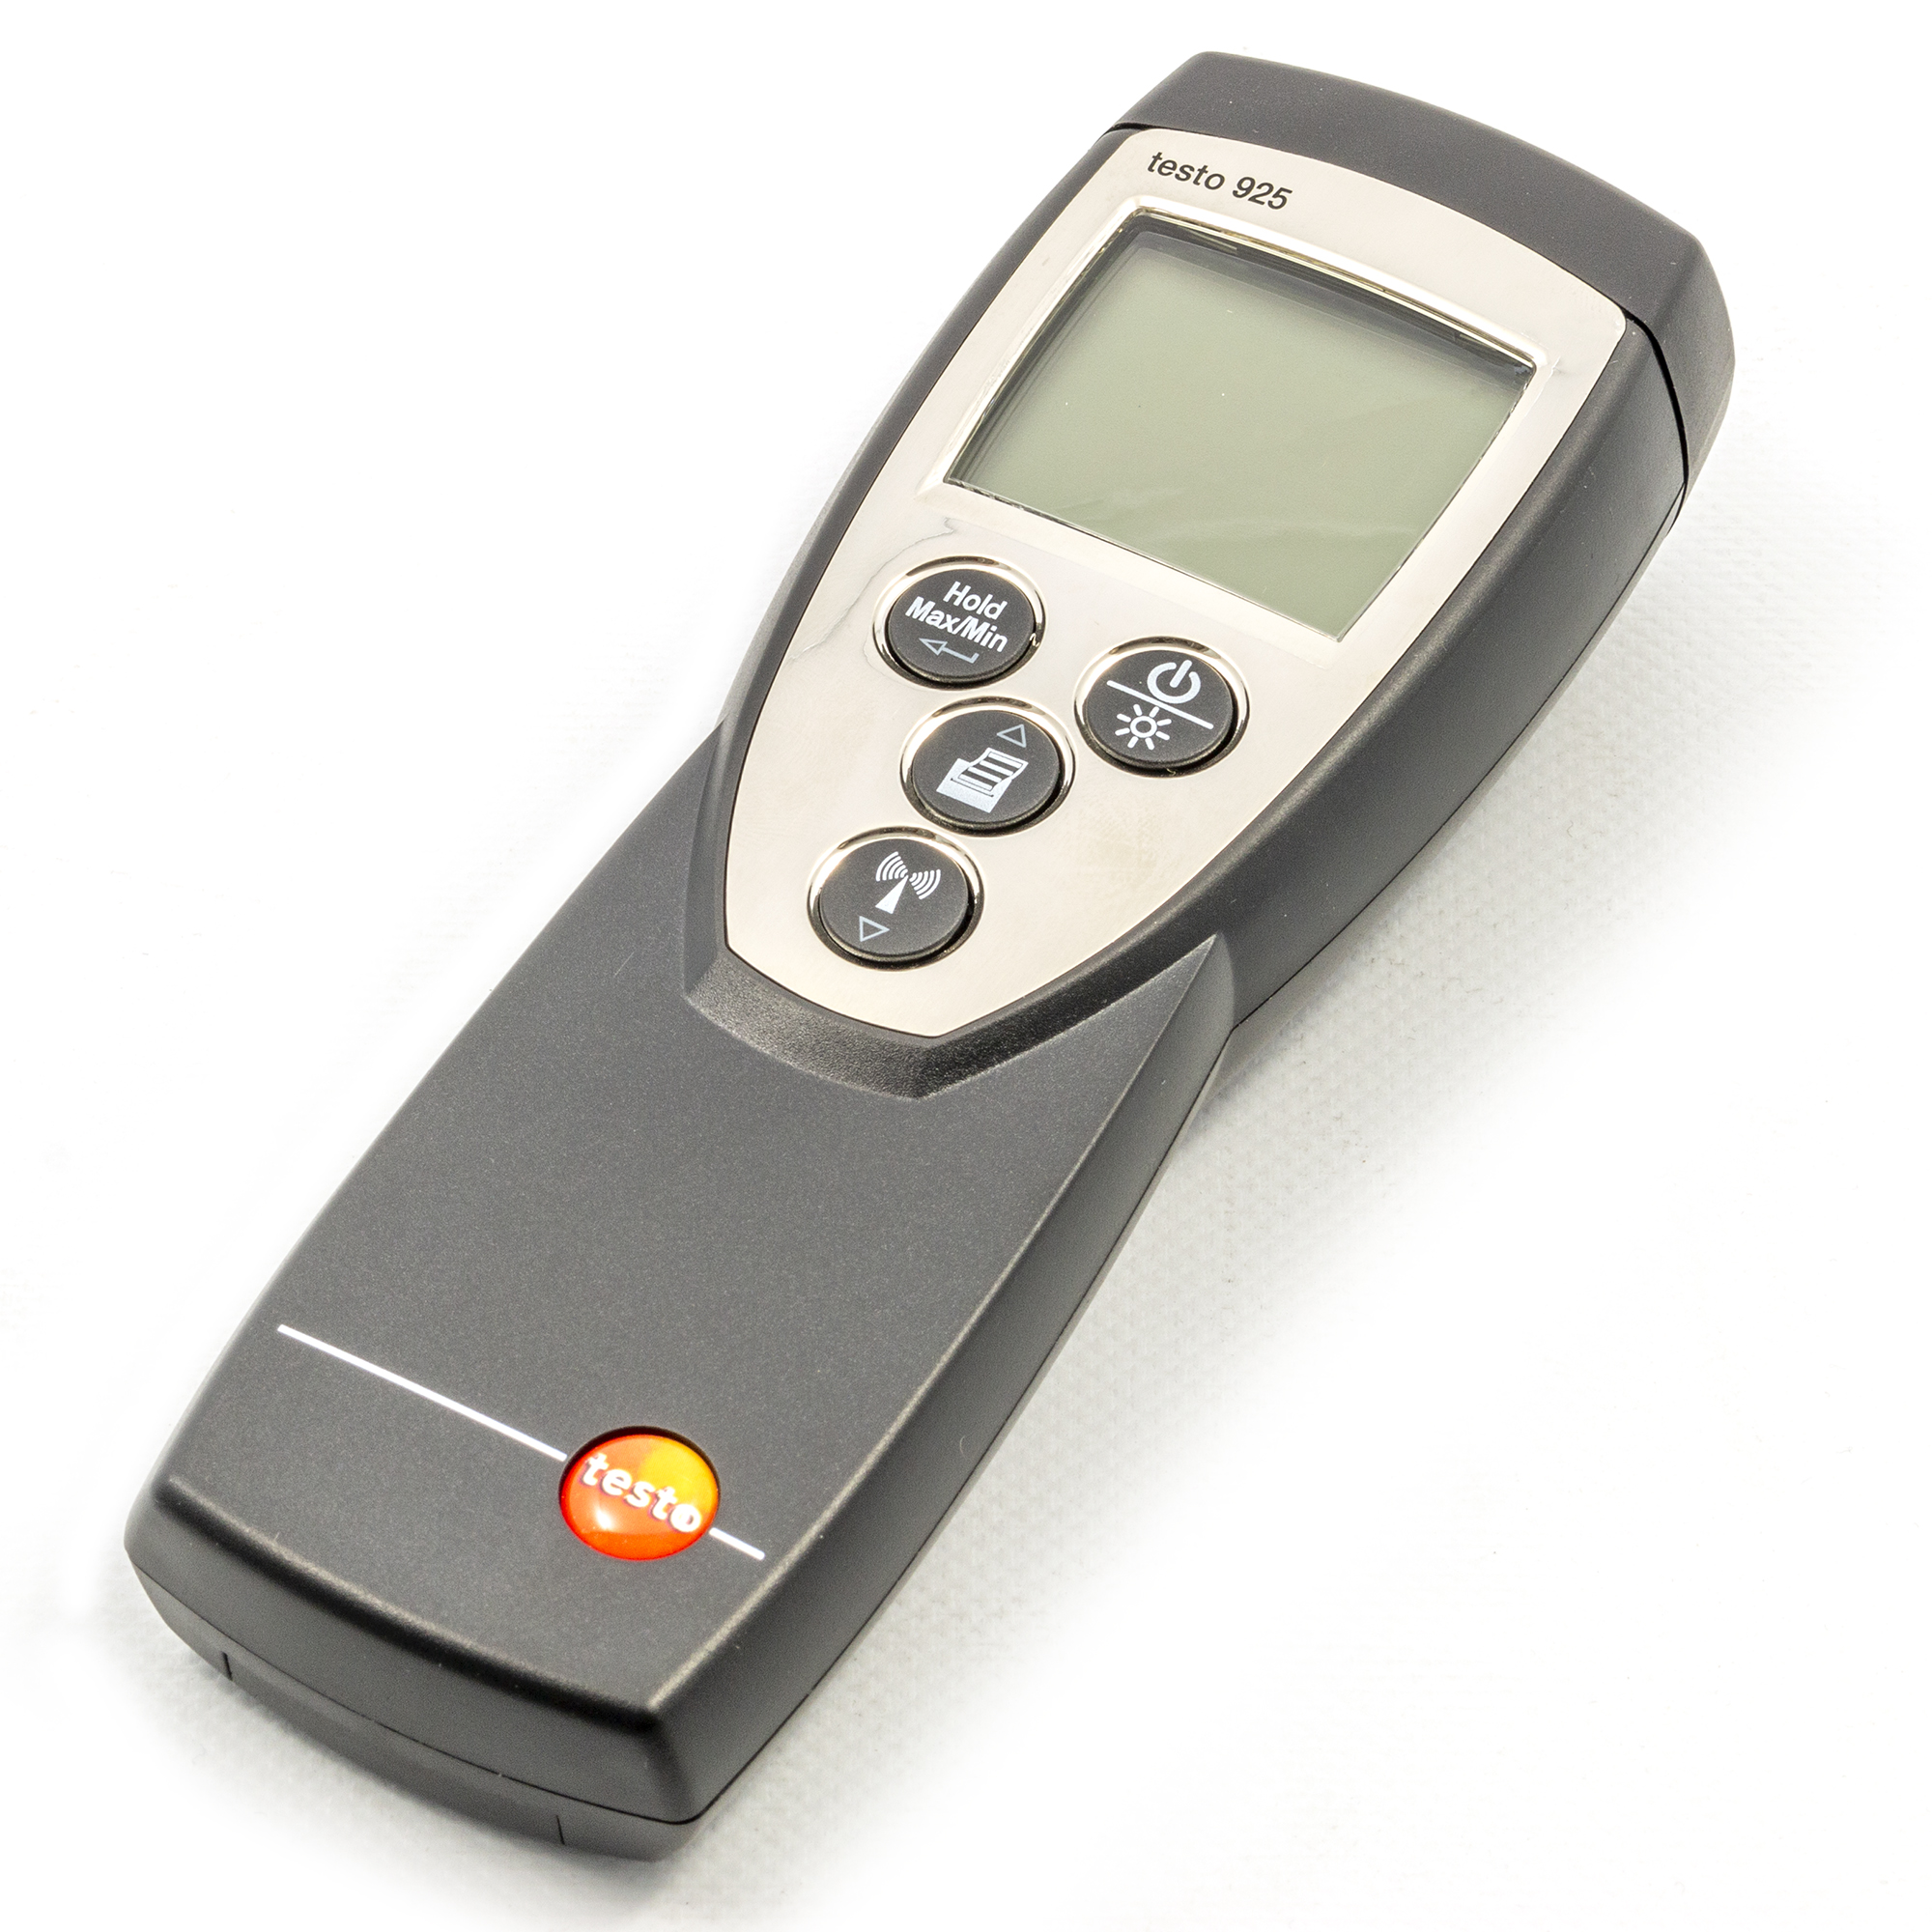 Digitale thermometer Testo 925 type K met ISO kalibratie